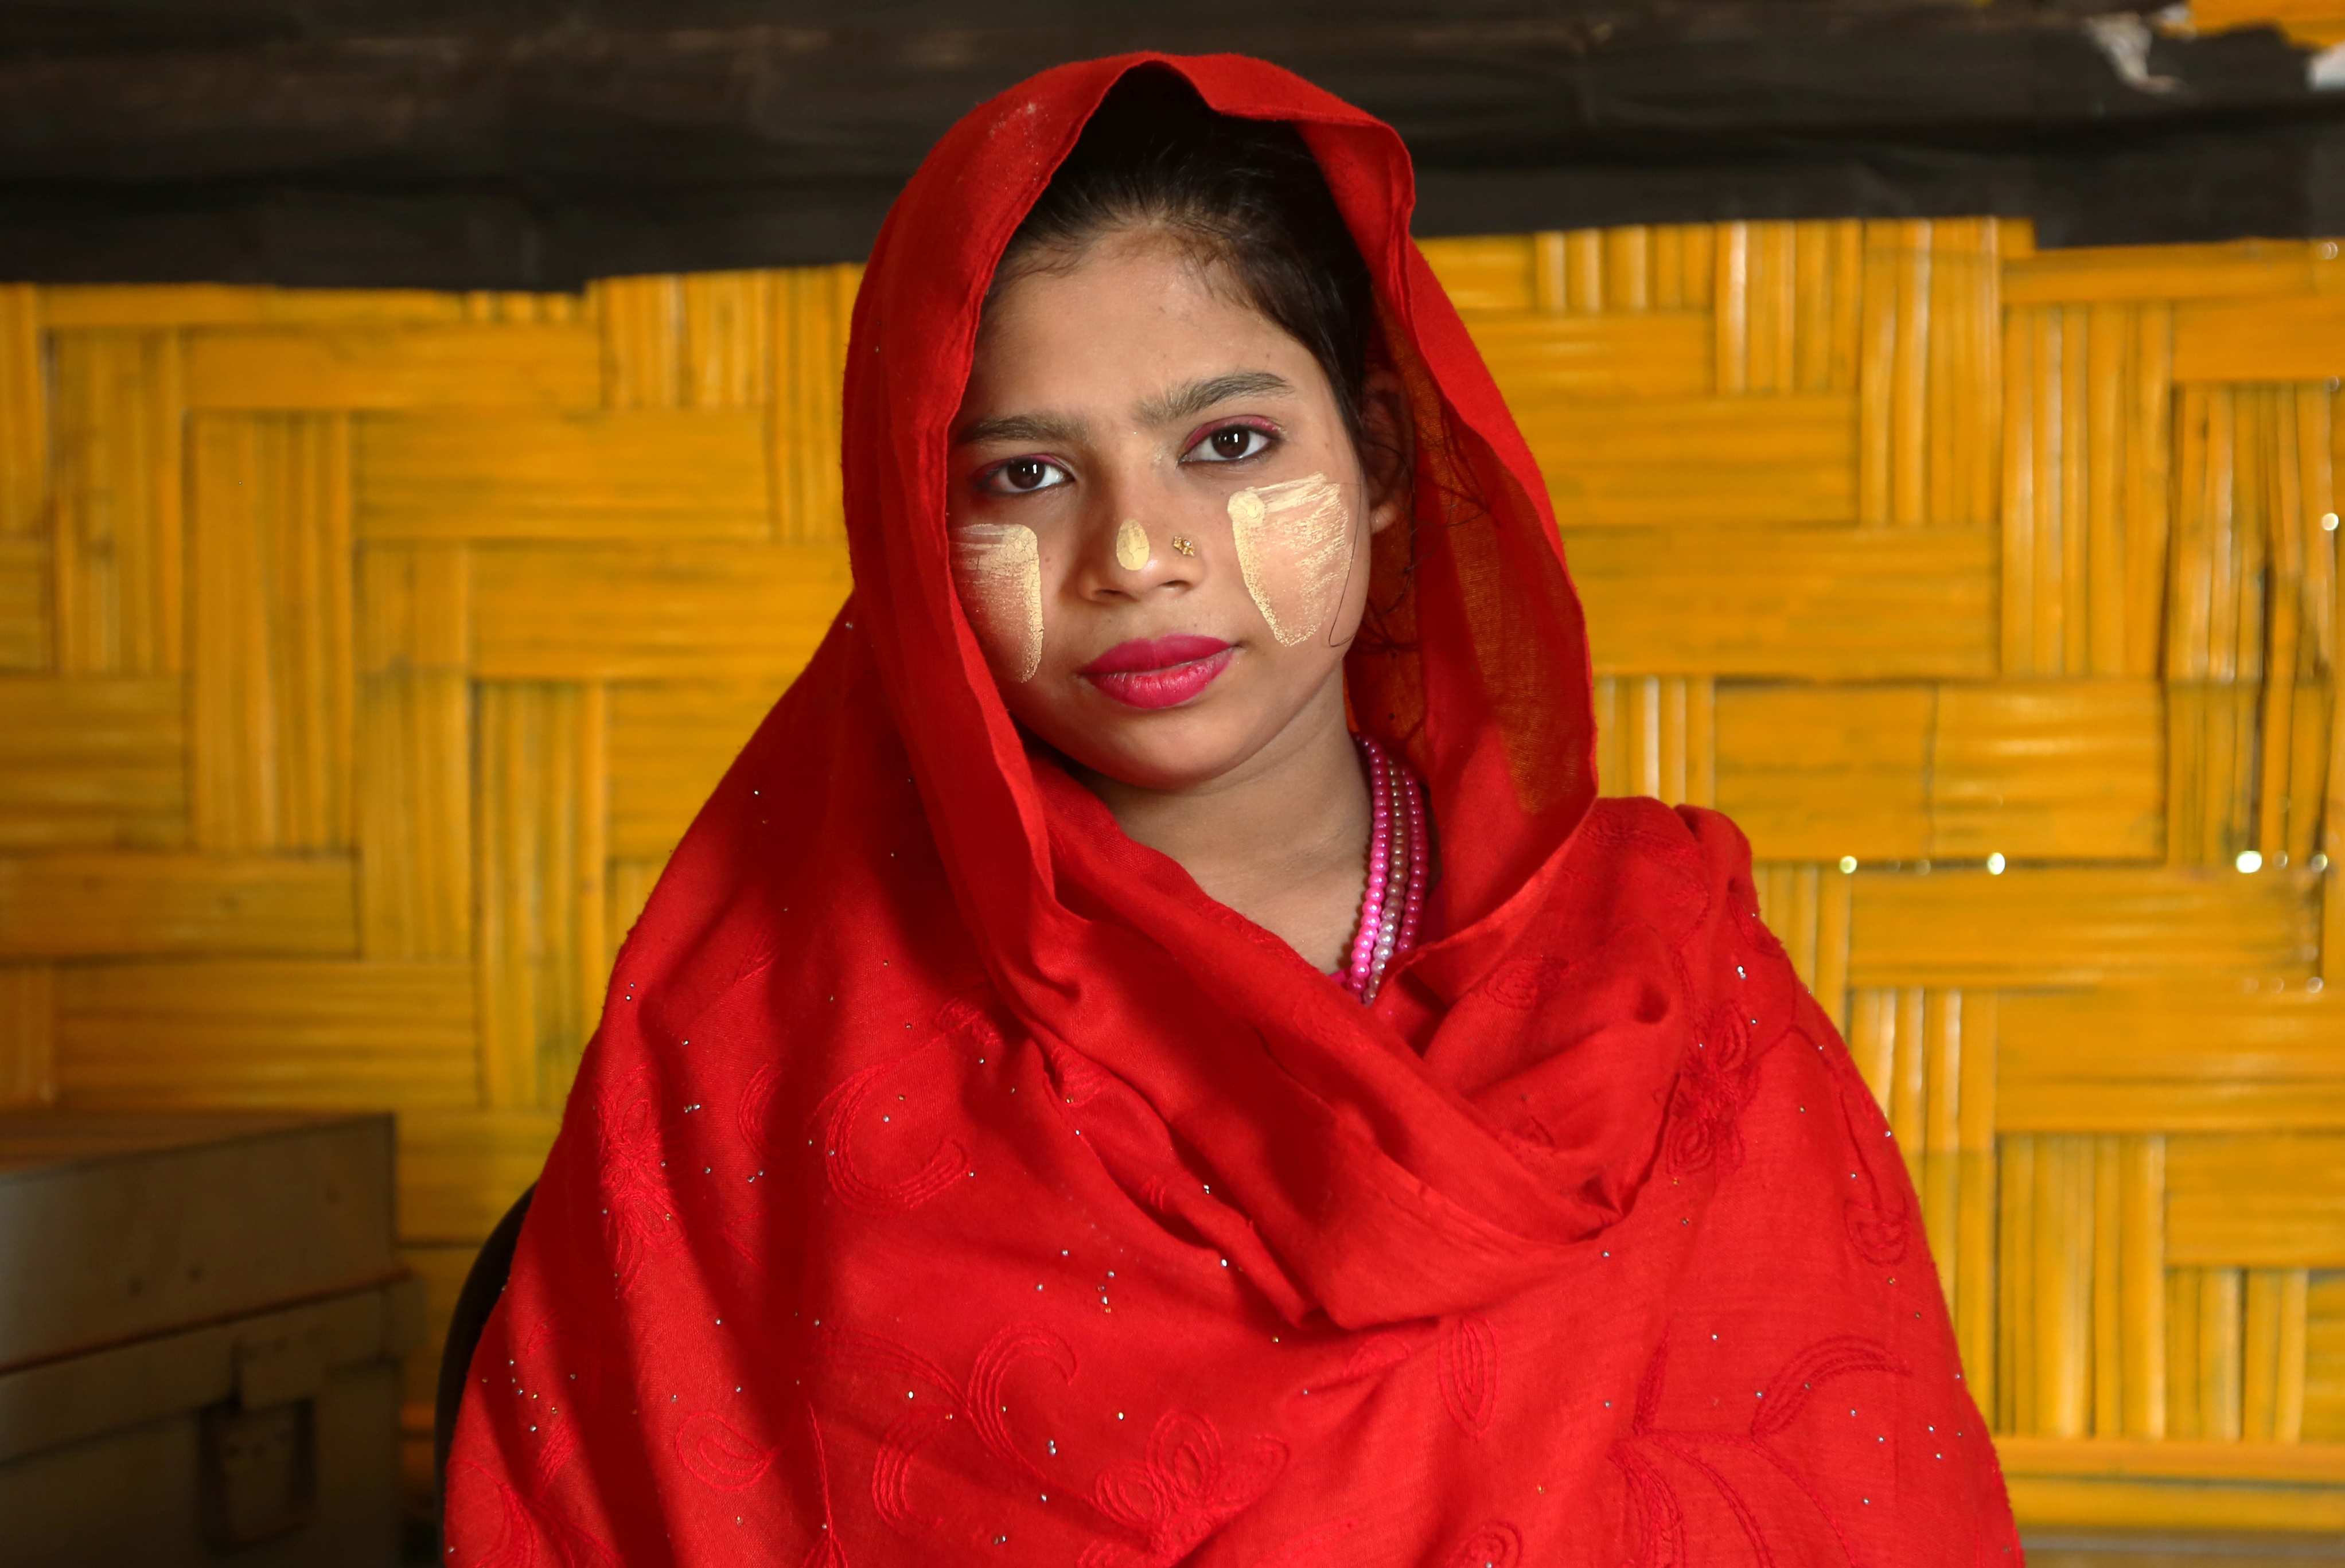 Une adolescente du Bangladesh regarde l'appareil photo